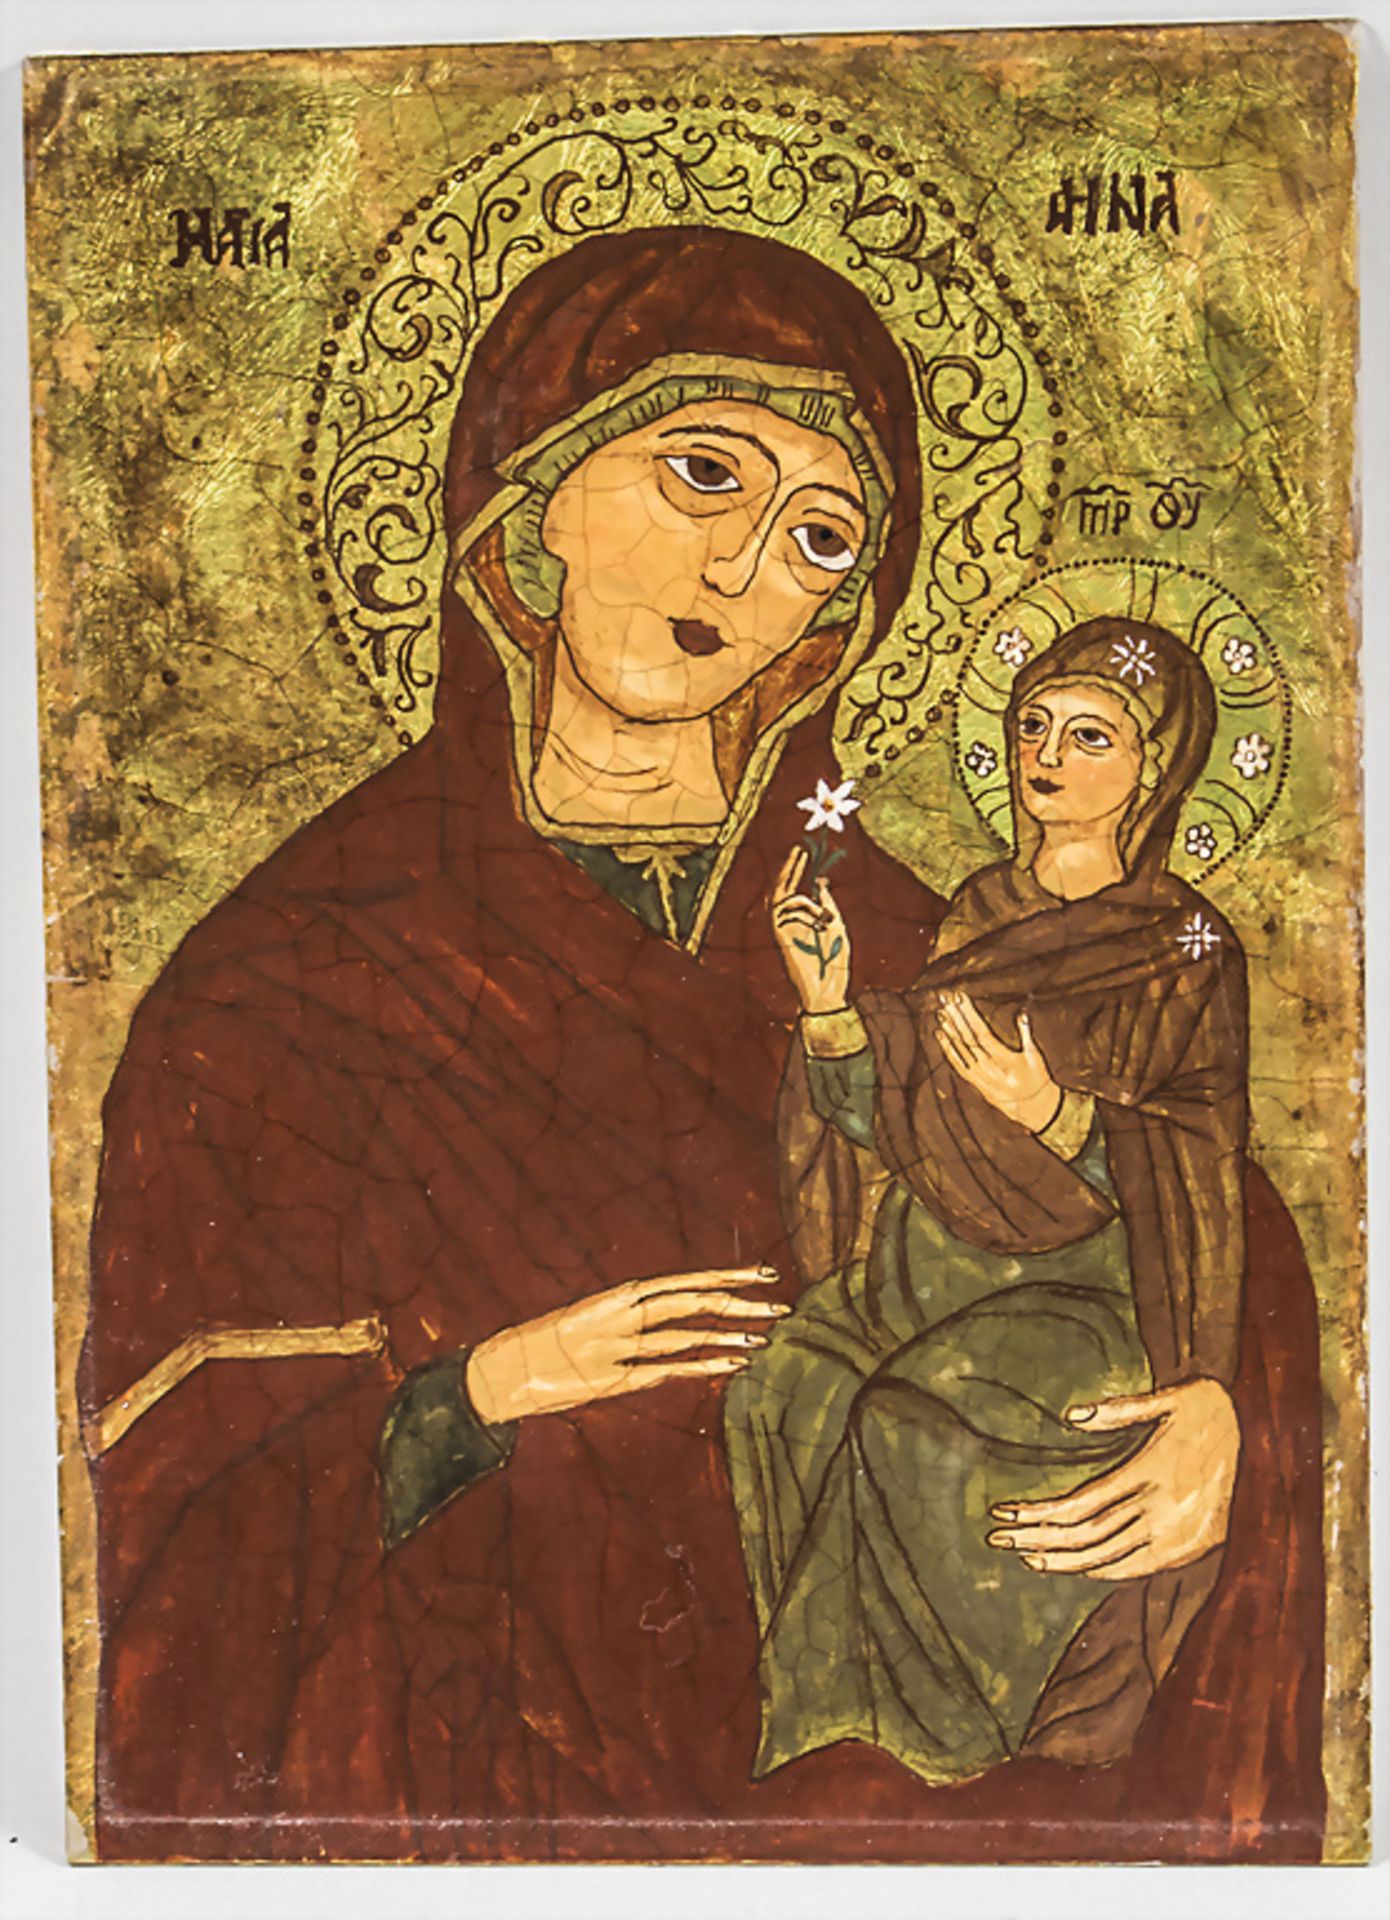 Hinterglasbild Ikone 'Heilige Anna mit Maria' / Behind glass Icon 'Holy Anna with Mary'